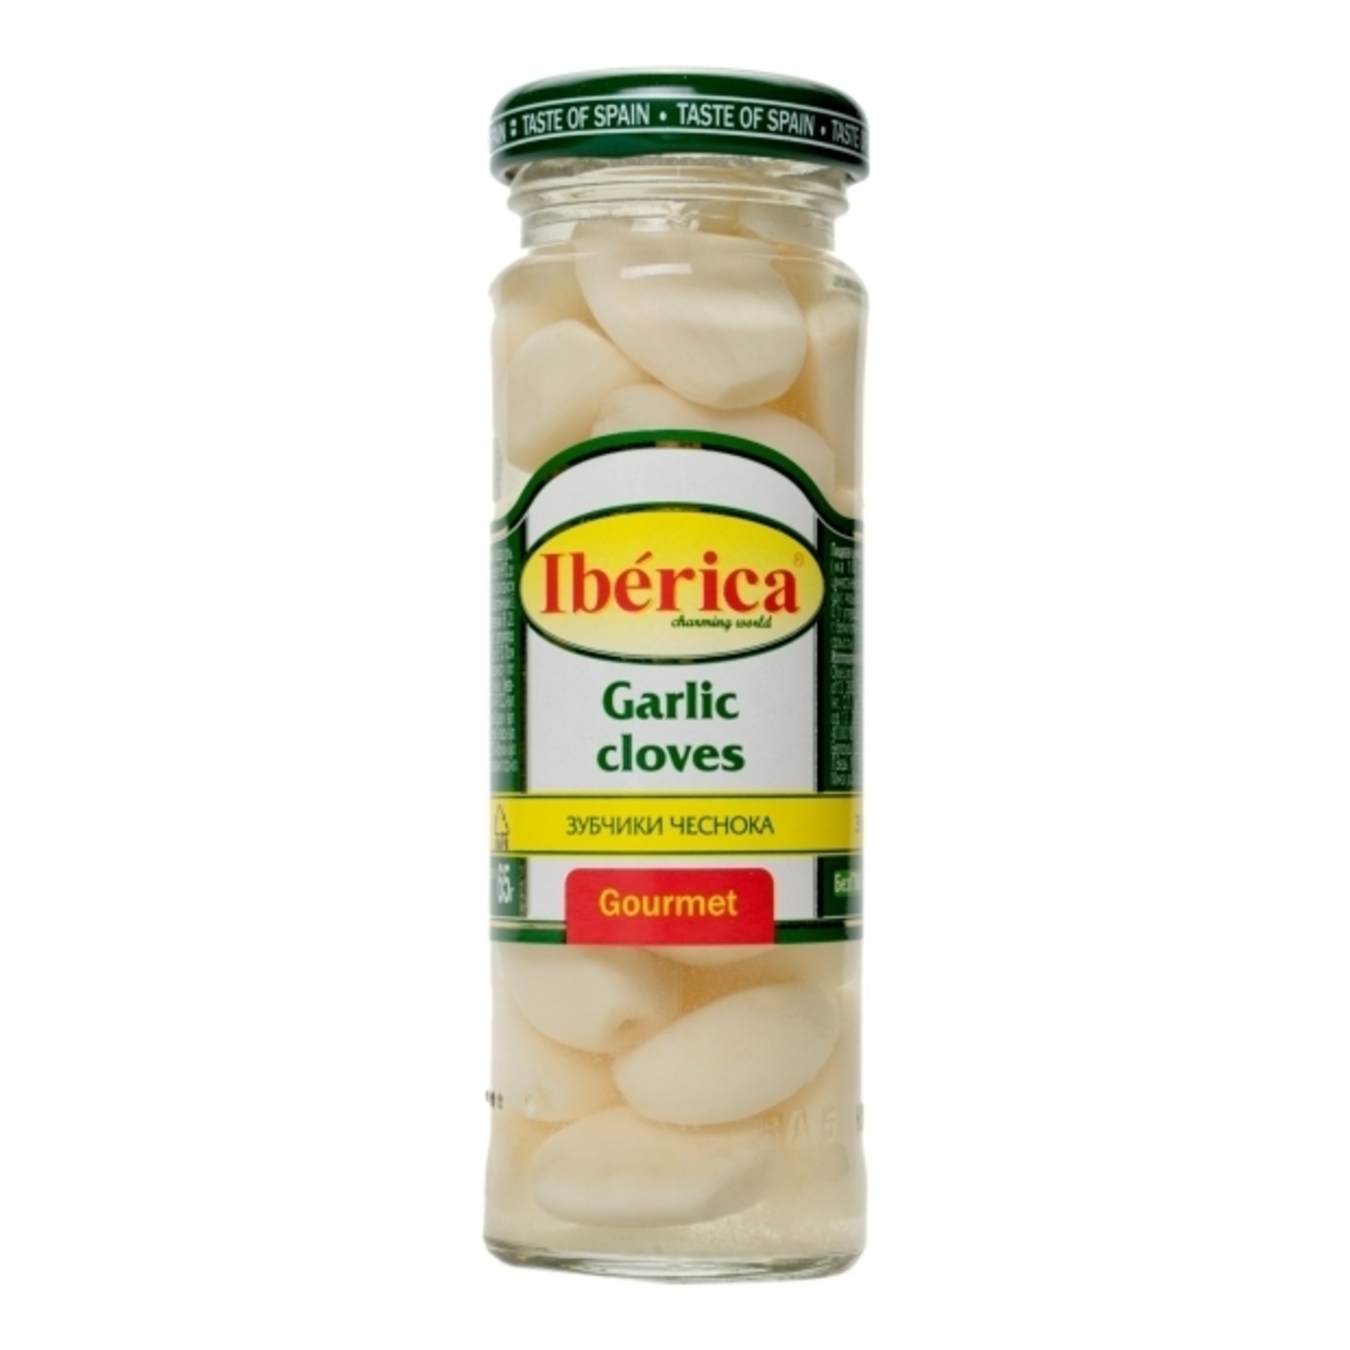 Iberica Garlic Cloves 100g